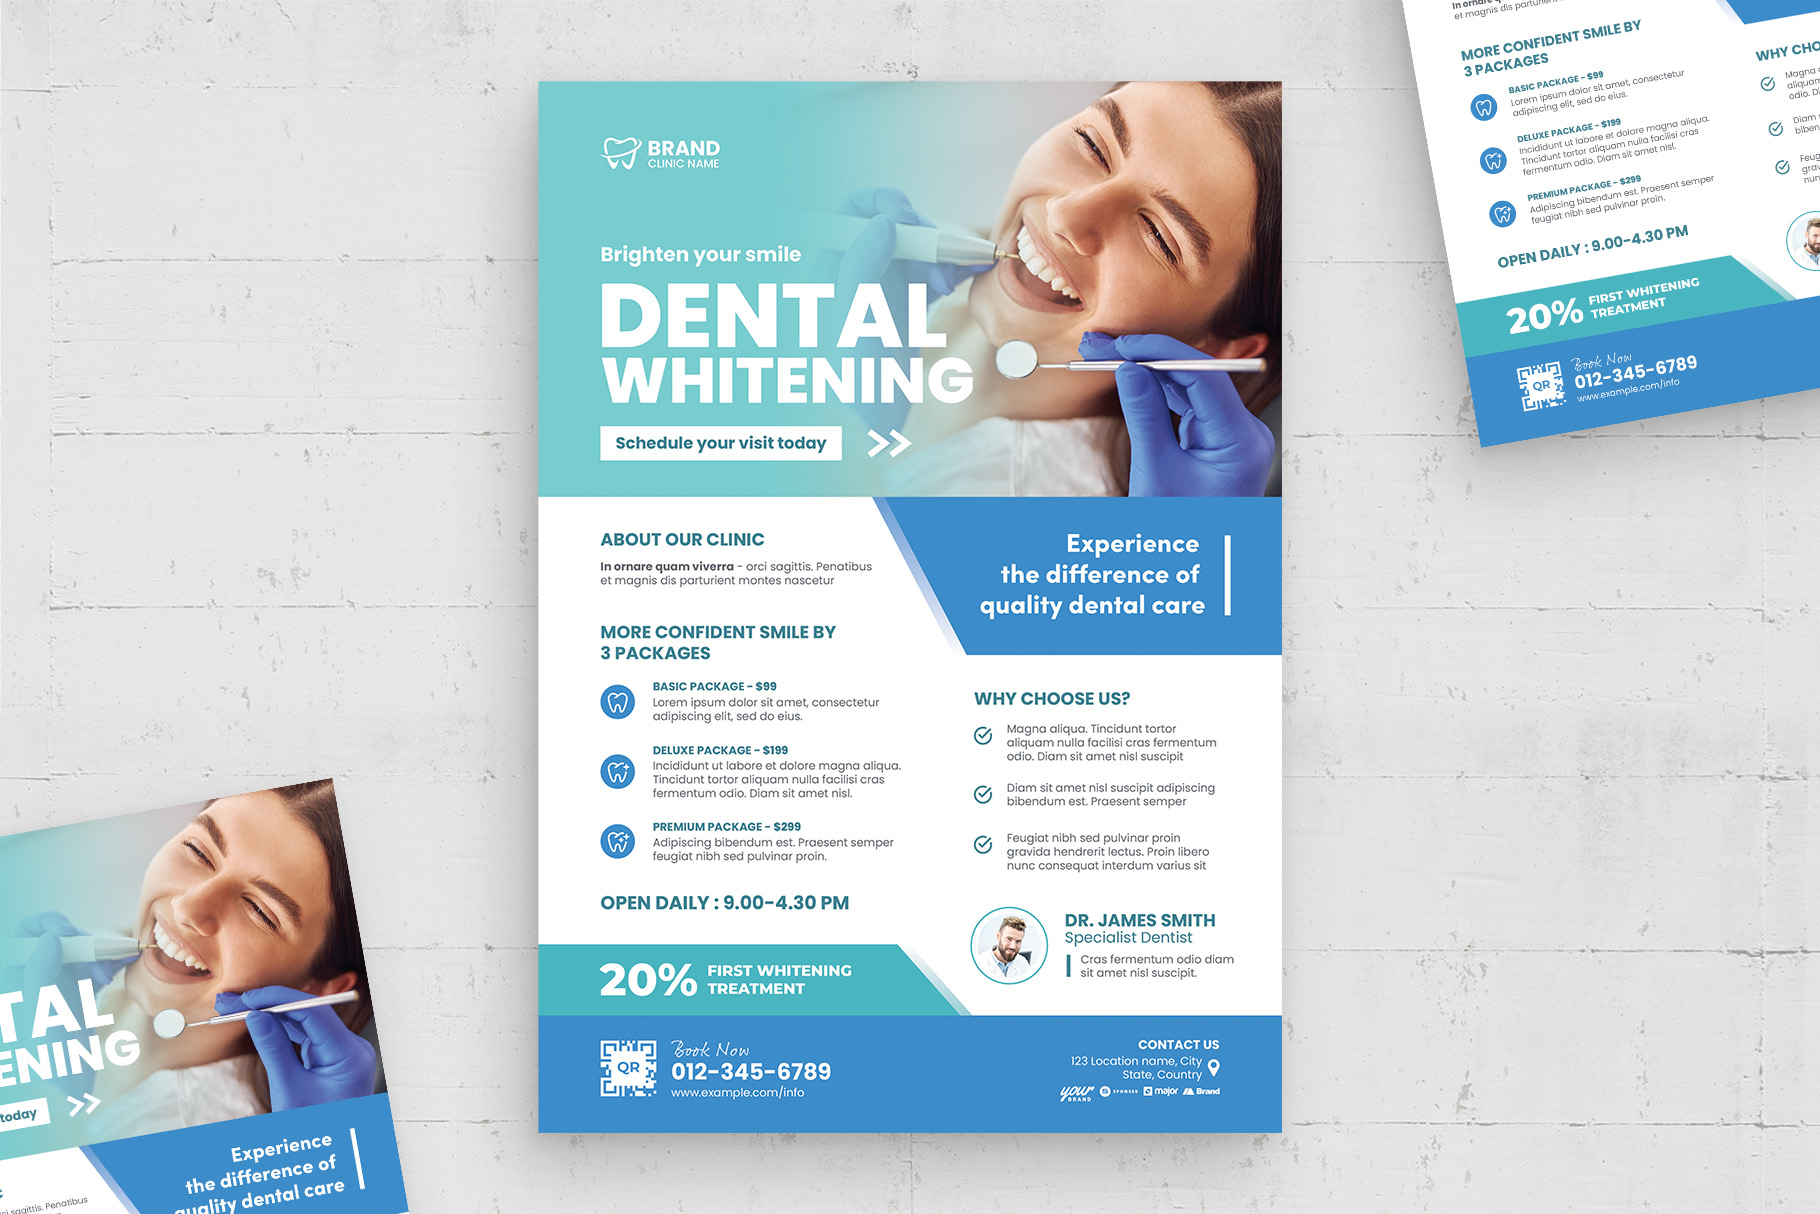 Dental Clinic Flyer Template (AI, EPS Format)